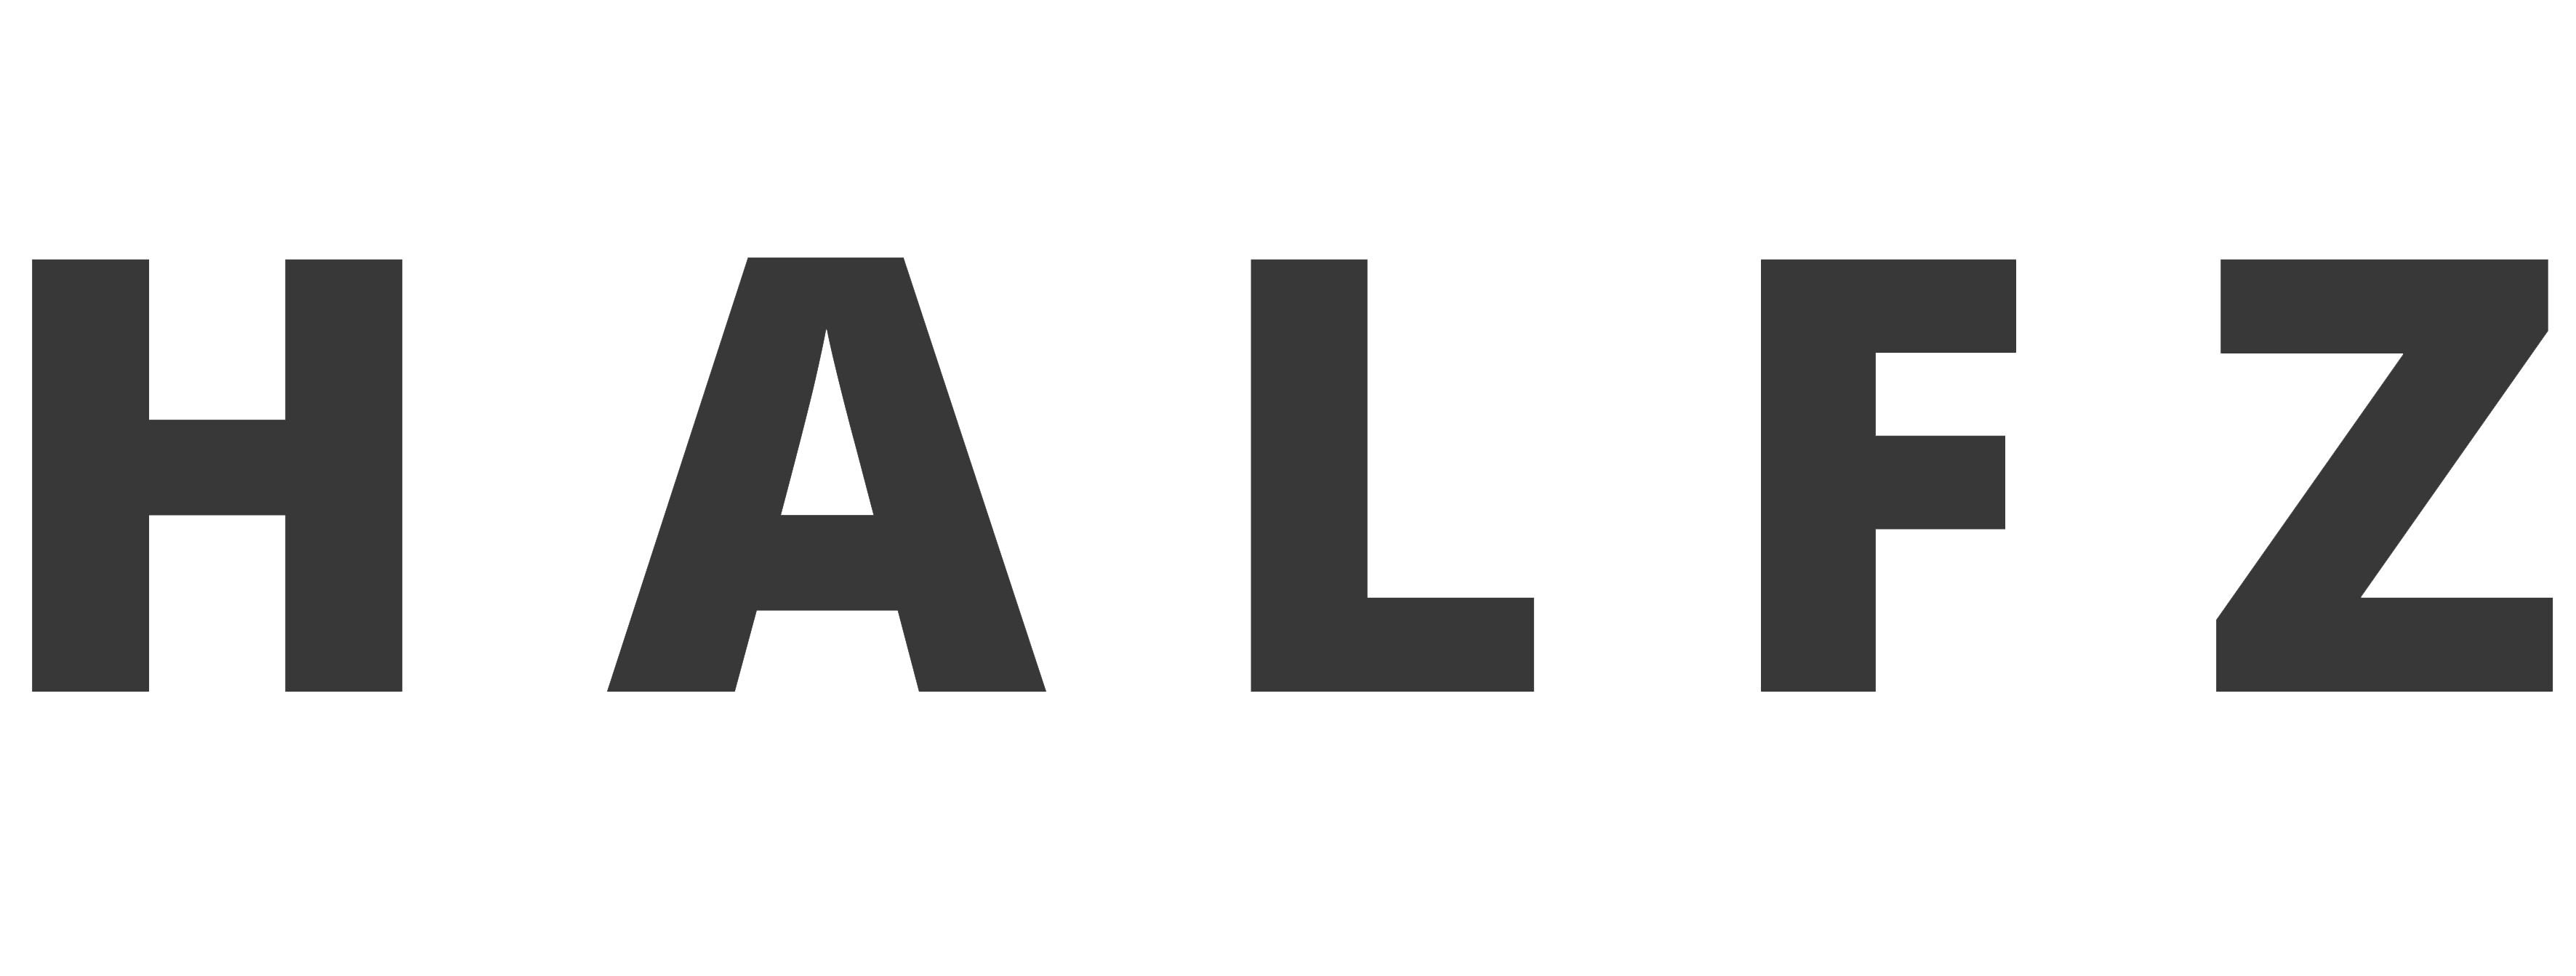 halfz_logo